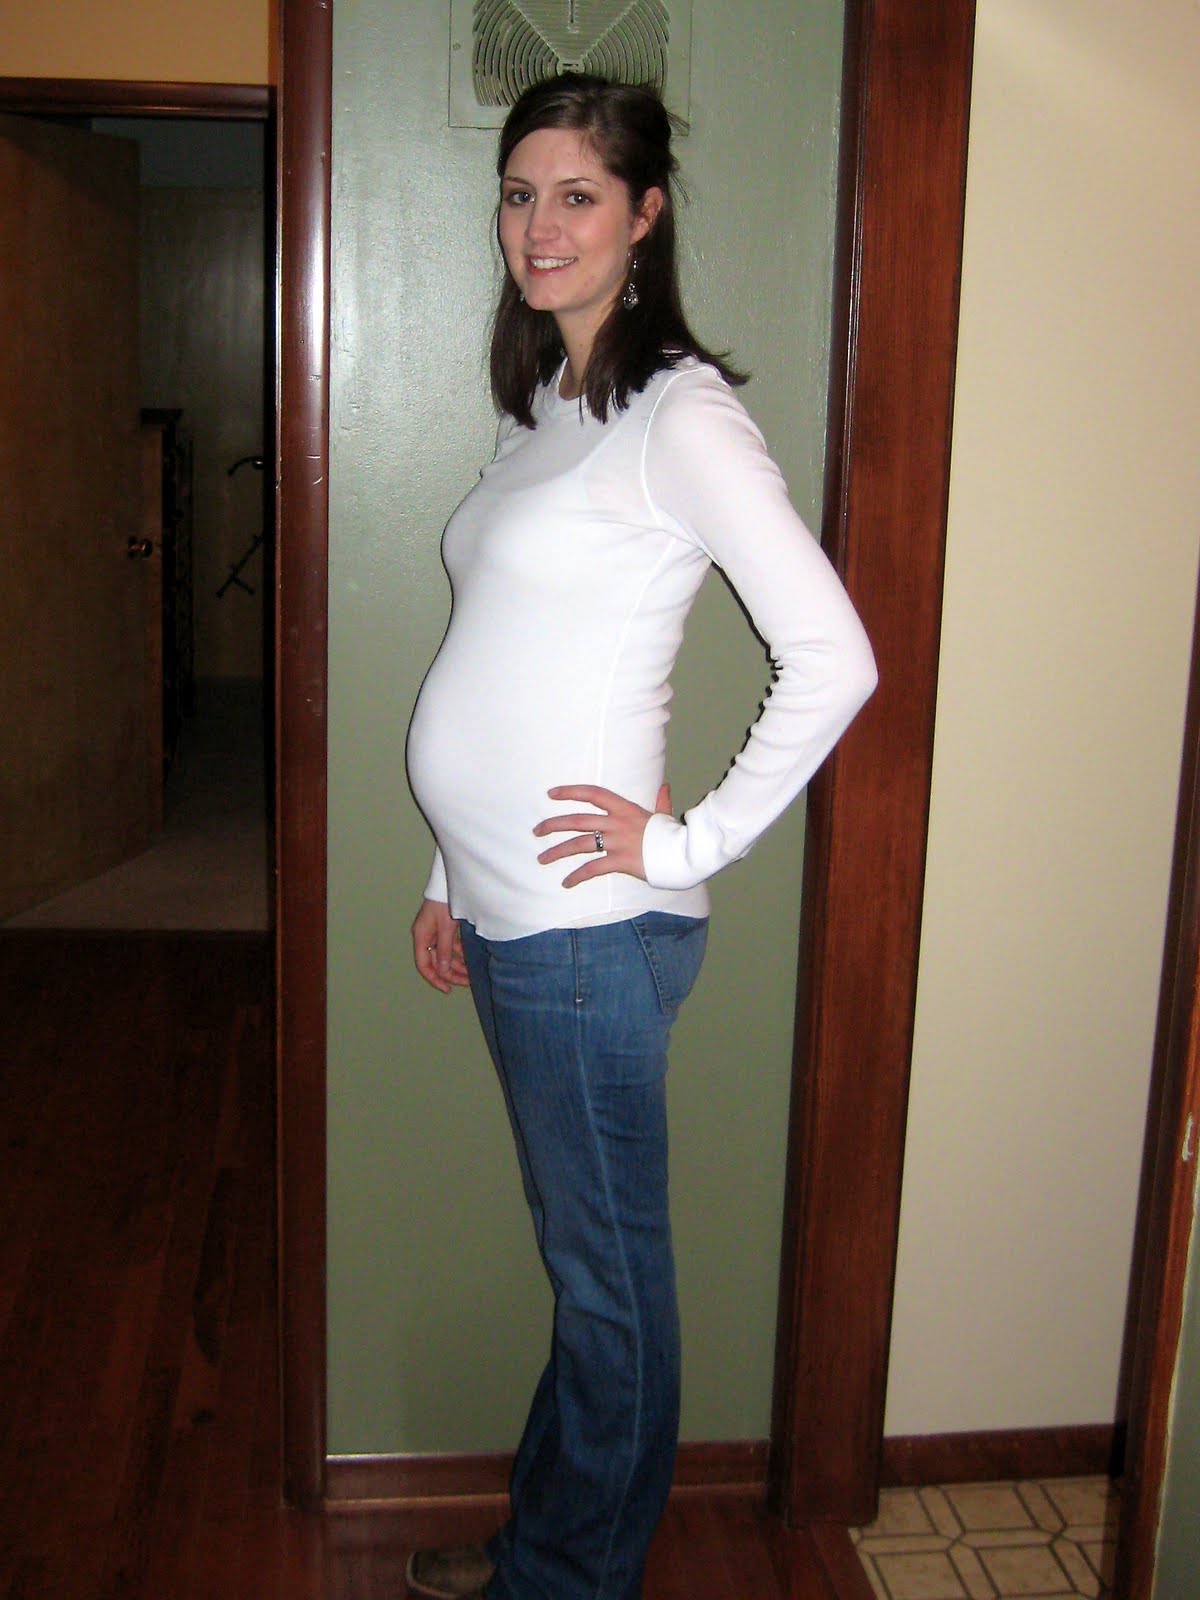 6 months pregnant